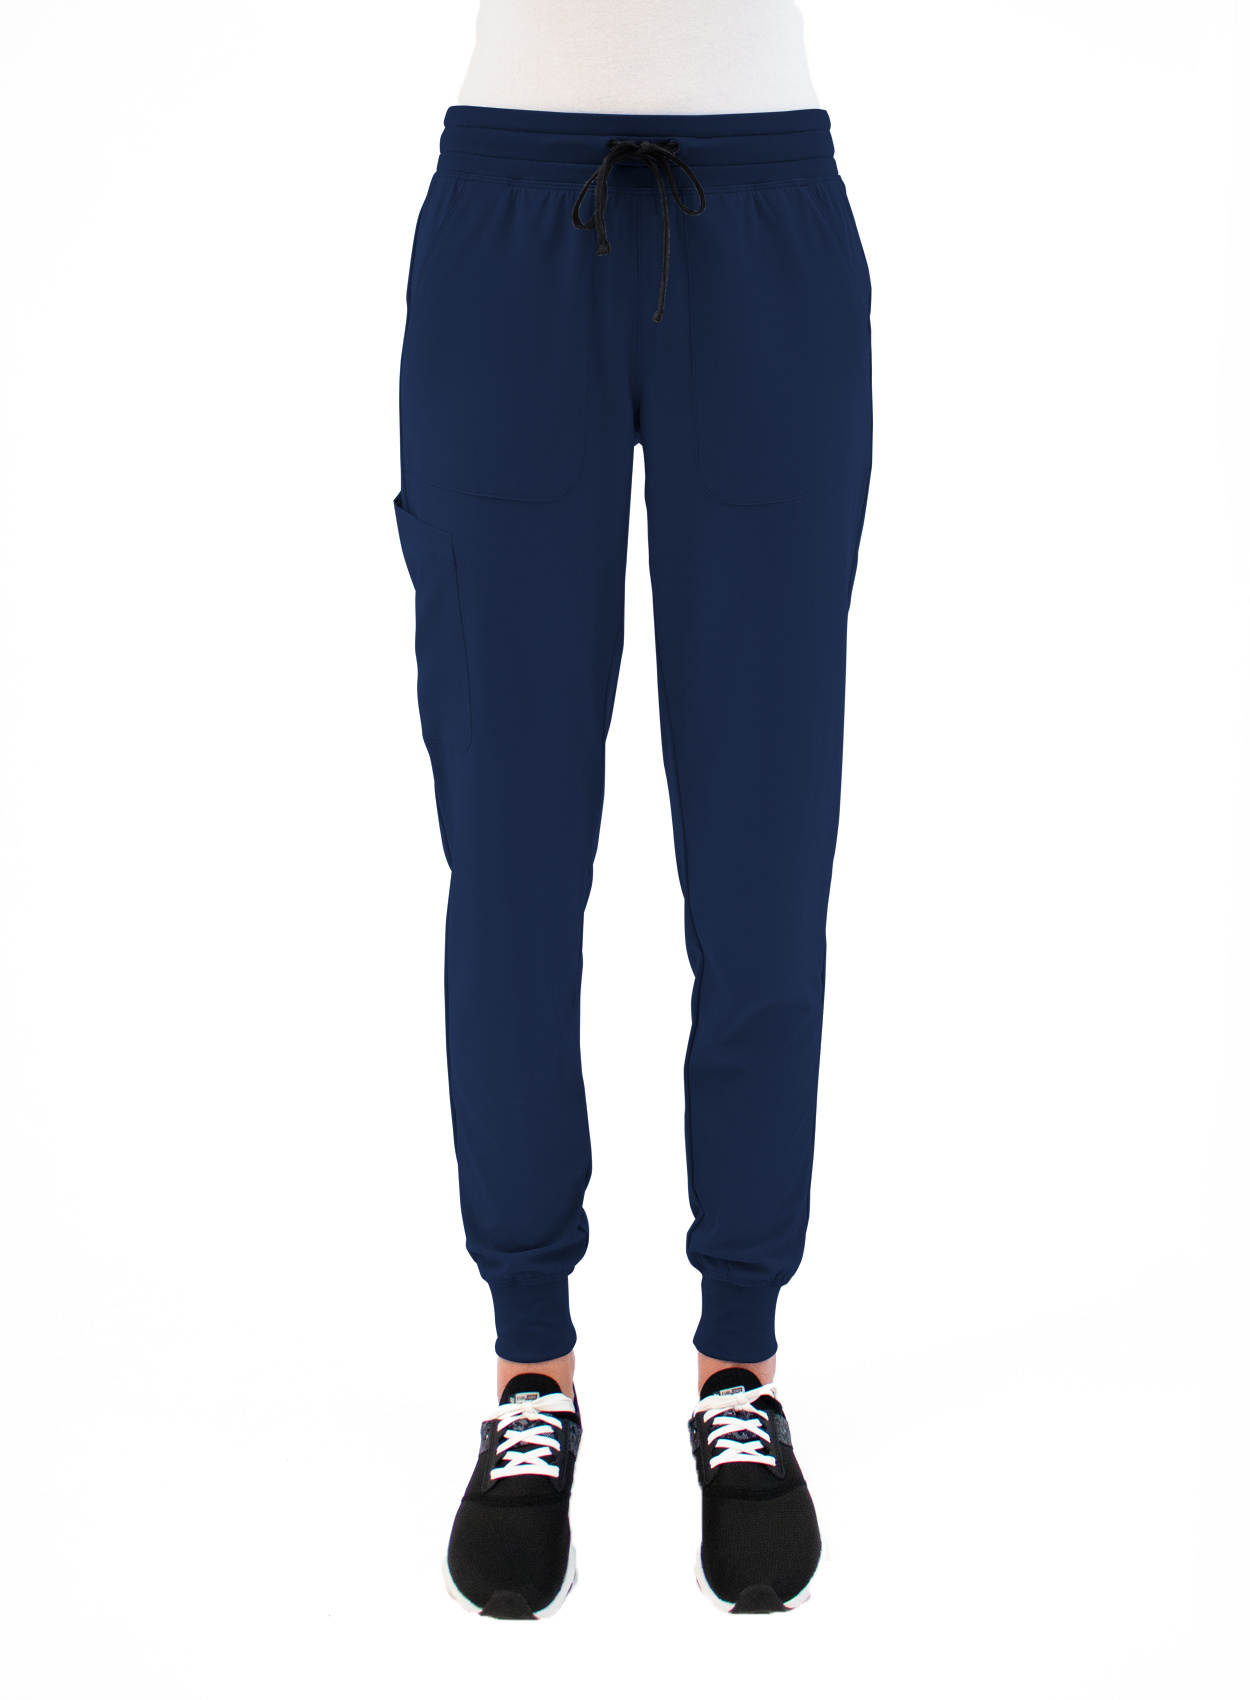 MATRIX IMPULSE Navy Blue Yoga Waistband Petite Women's Jogger Pants 8520P